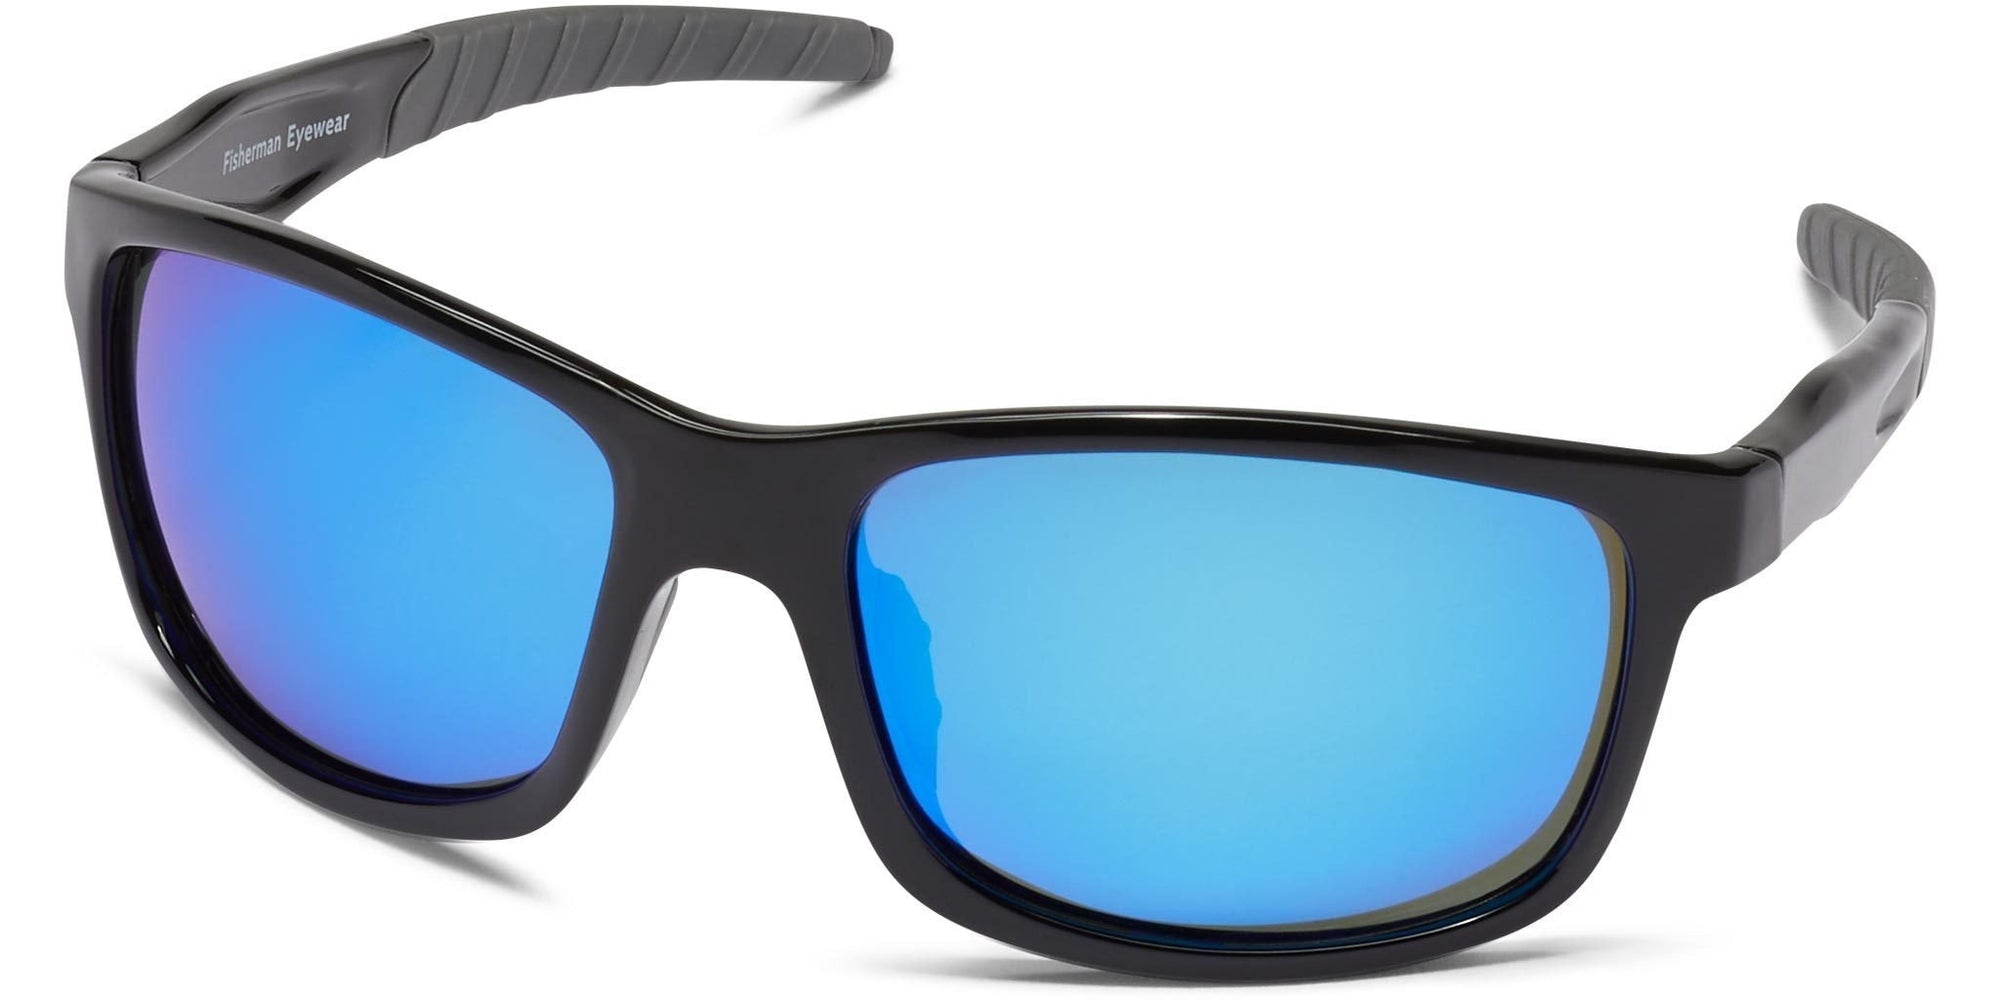 Fisherman Eyewear Grander Polarized Glasses for Fishing, Shiny